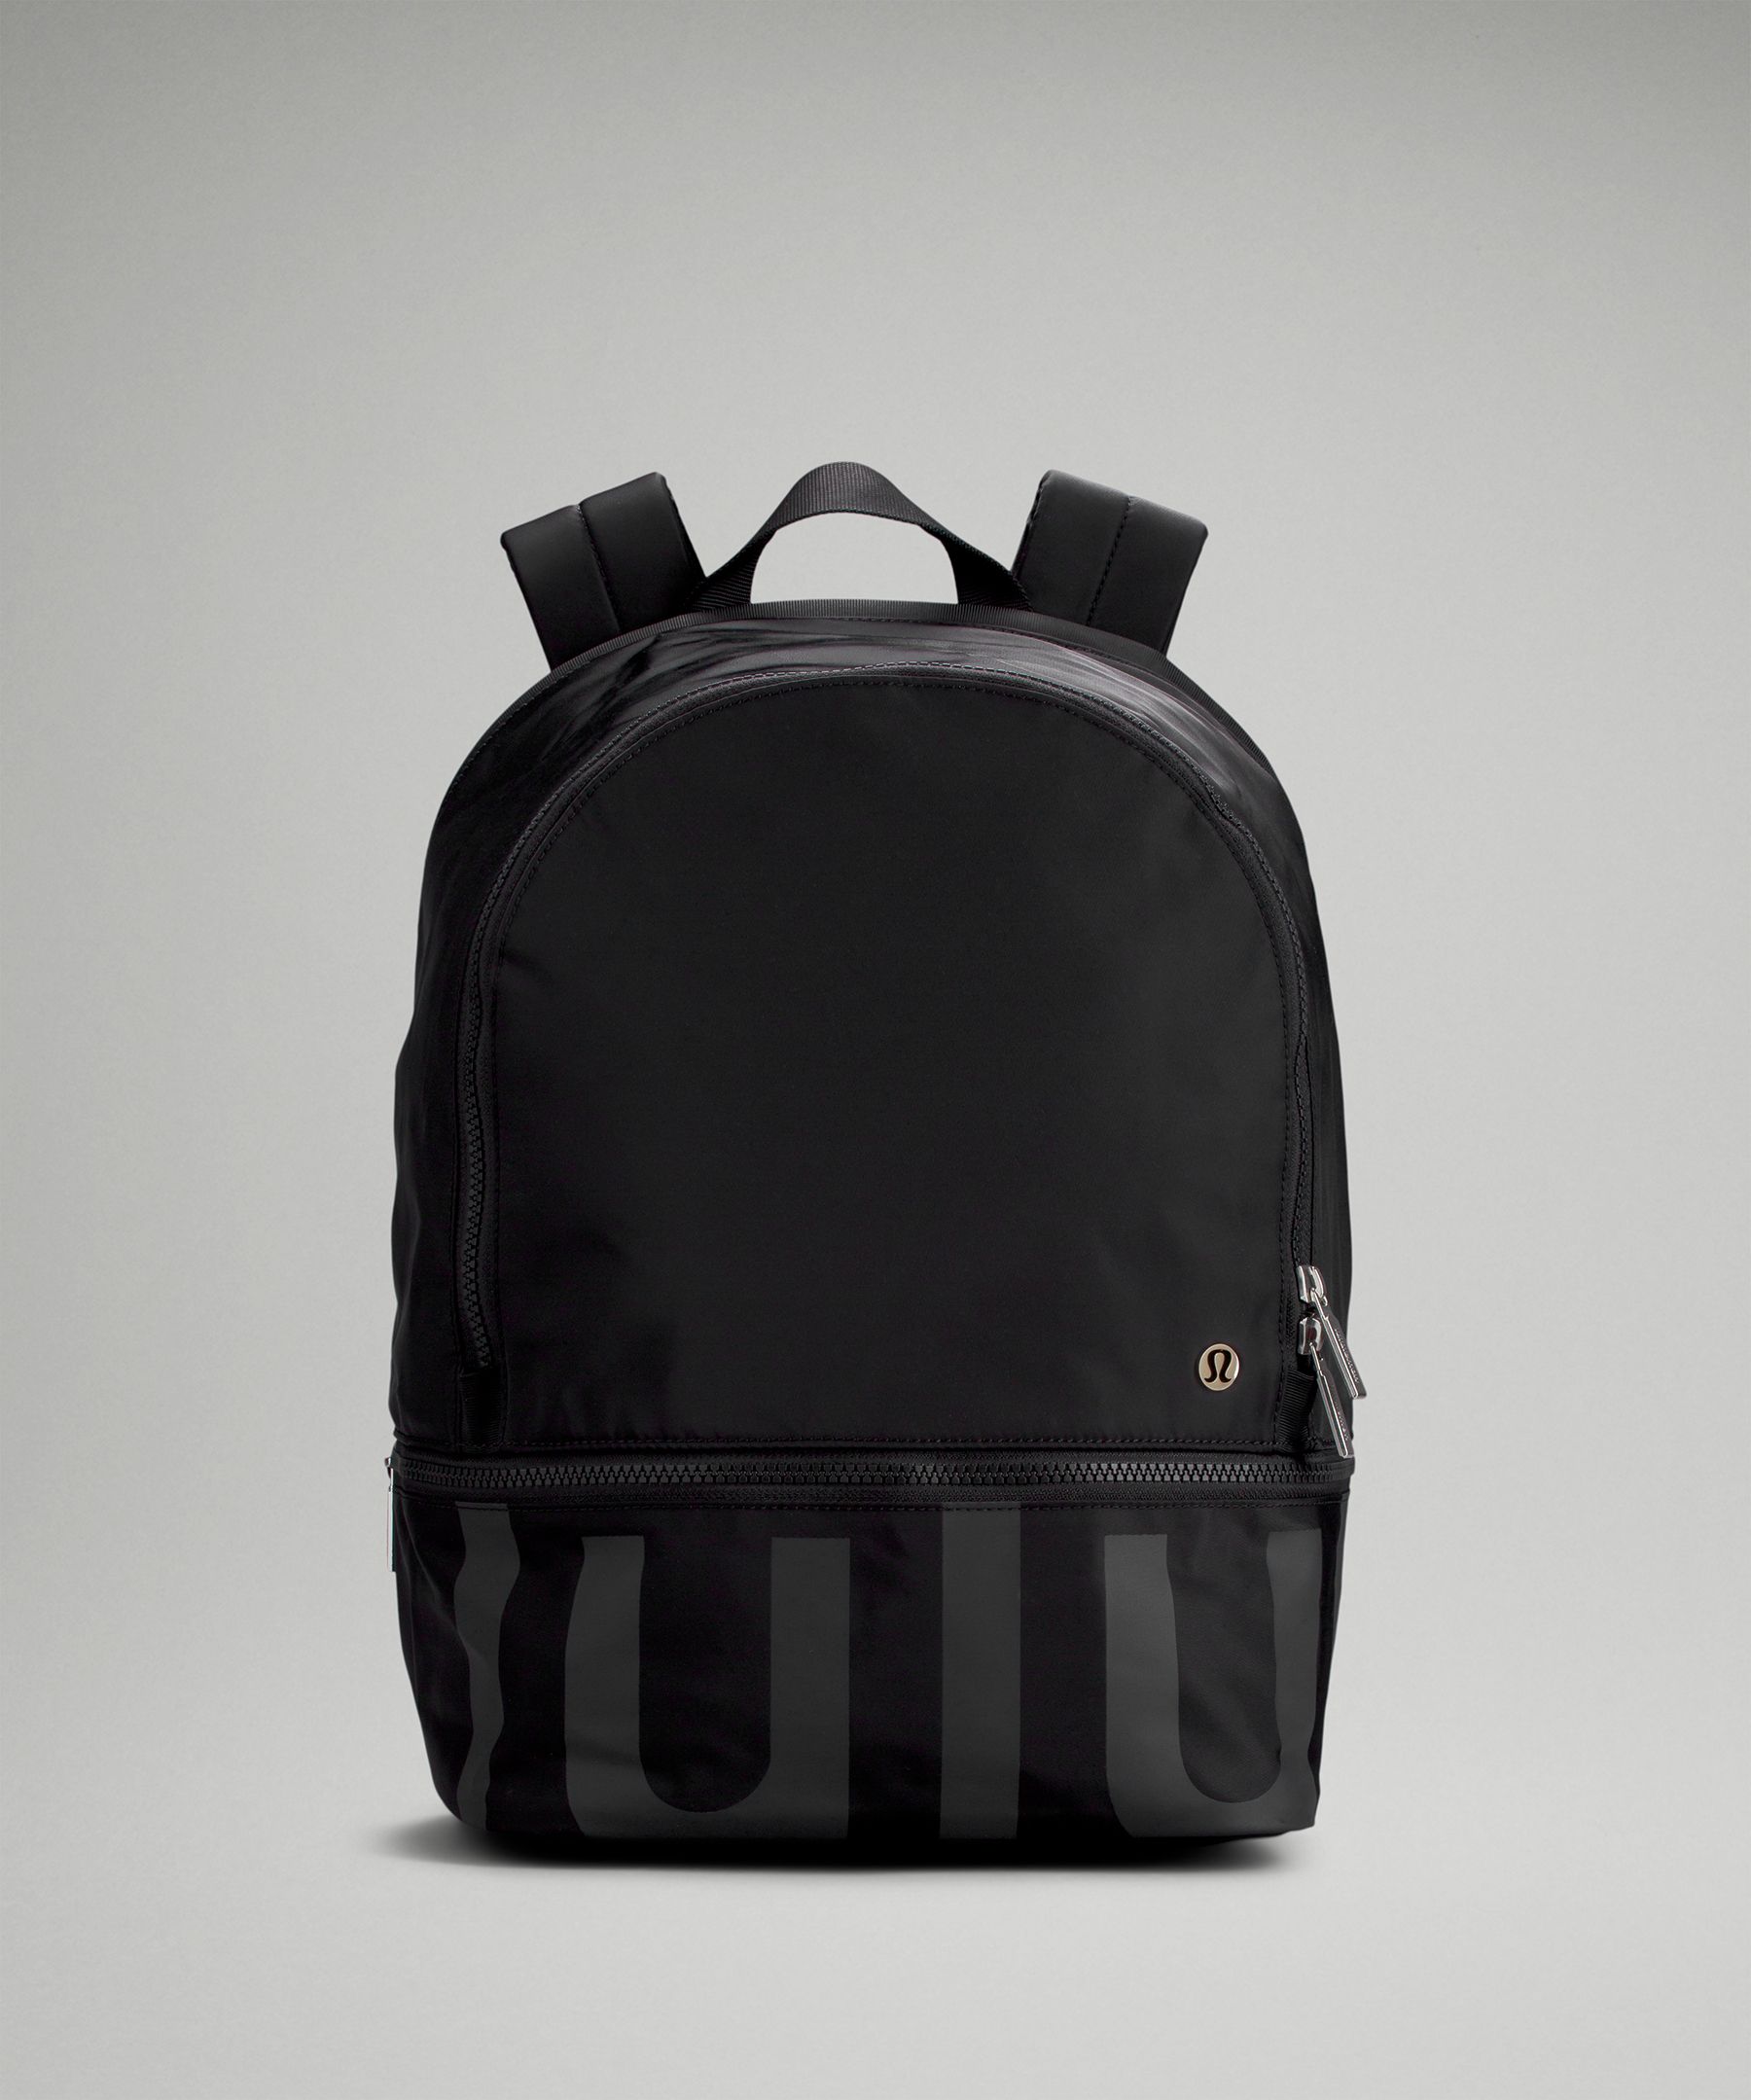 Lululemon City Adventurer Backpack 20l In Black/graphite Grey | ModeSens